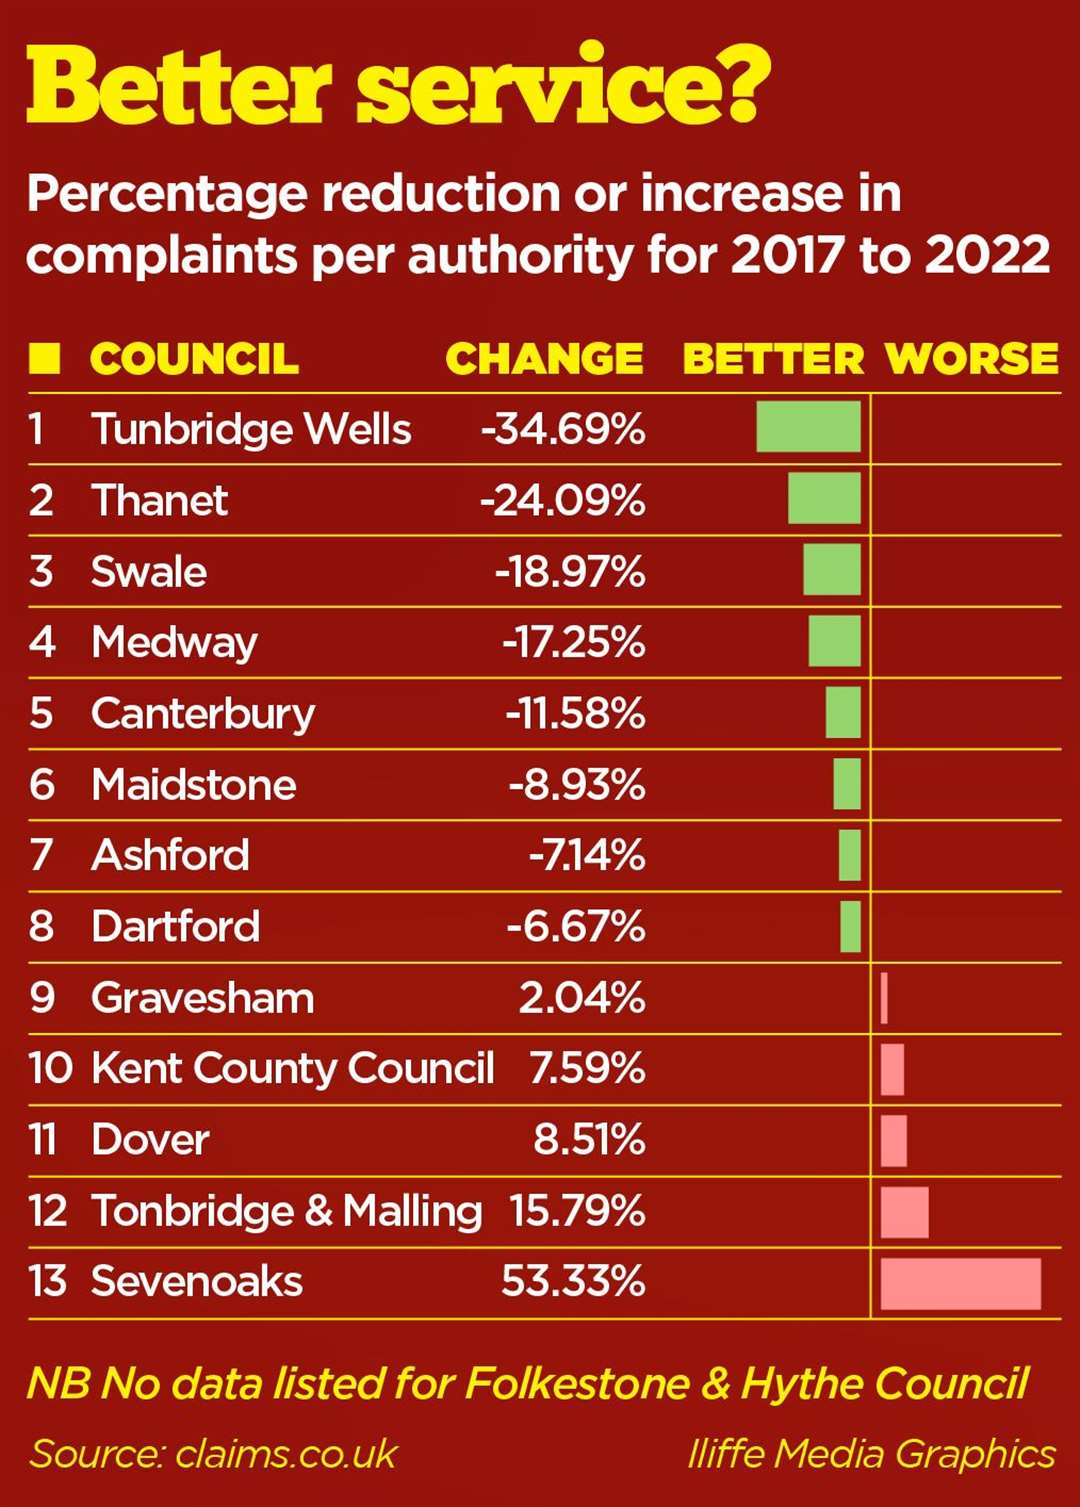 Tunbridge Wells council has seen the biggest reduction in complaints